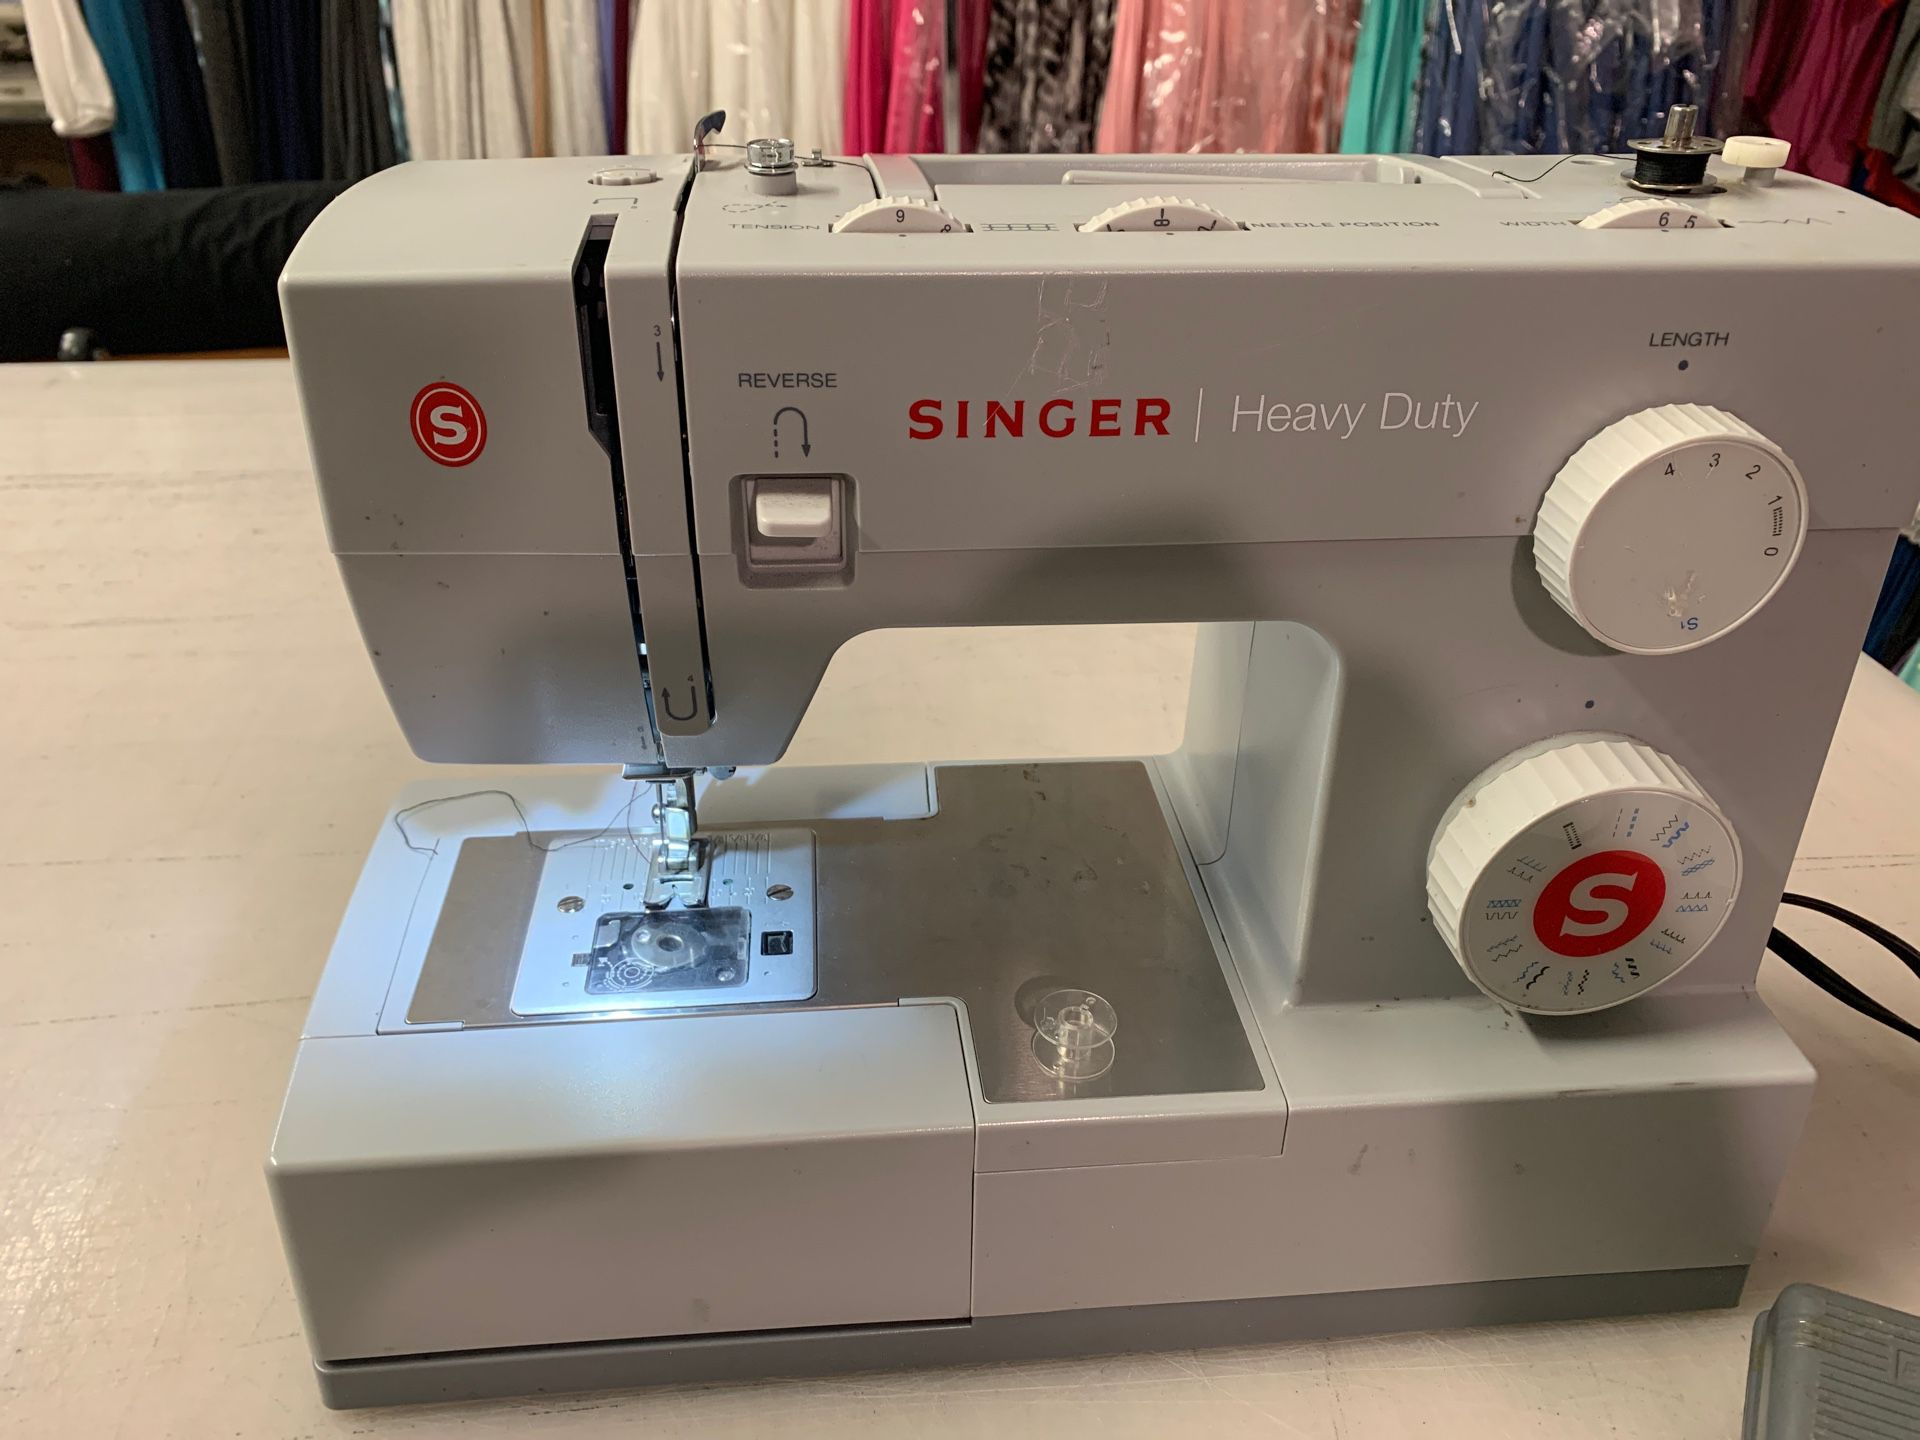 Singer sewing machine heavy duty